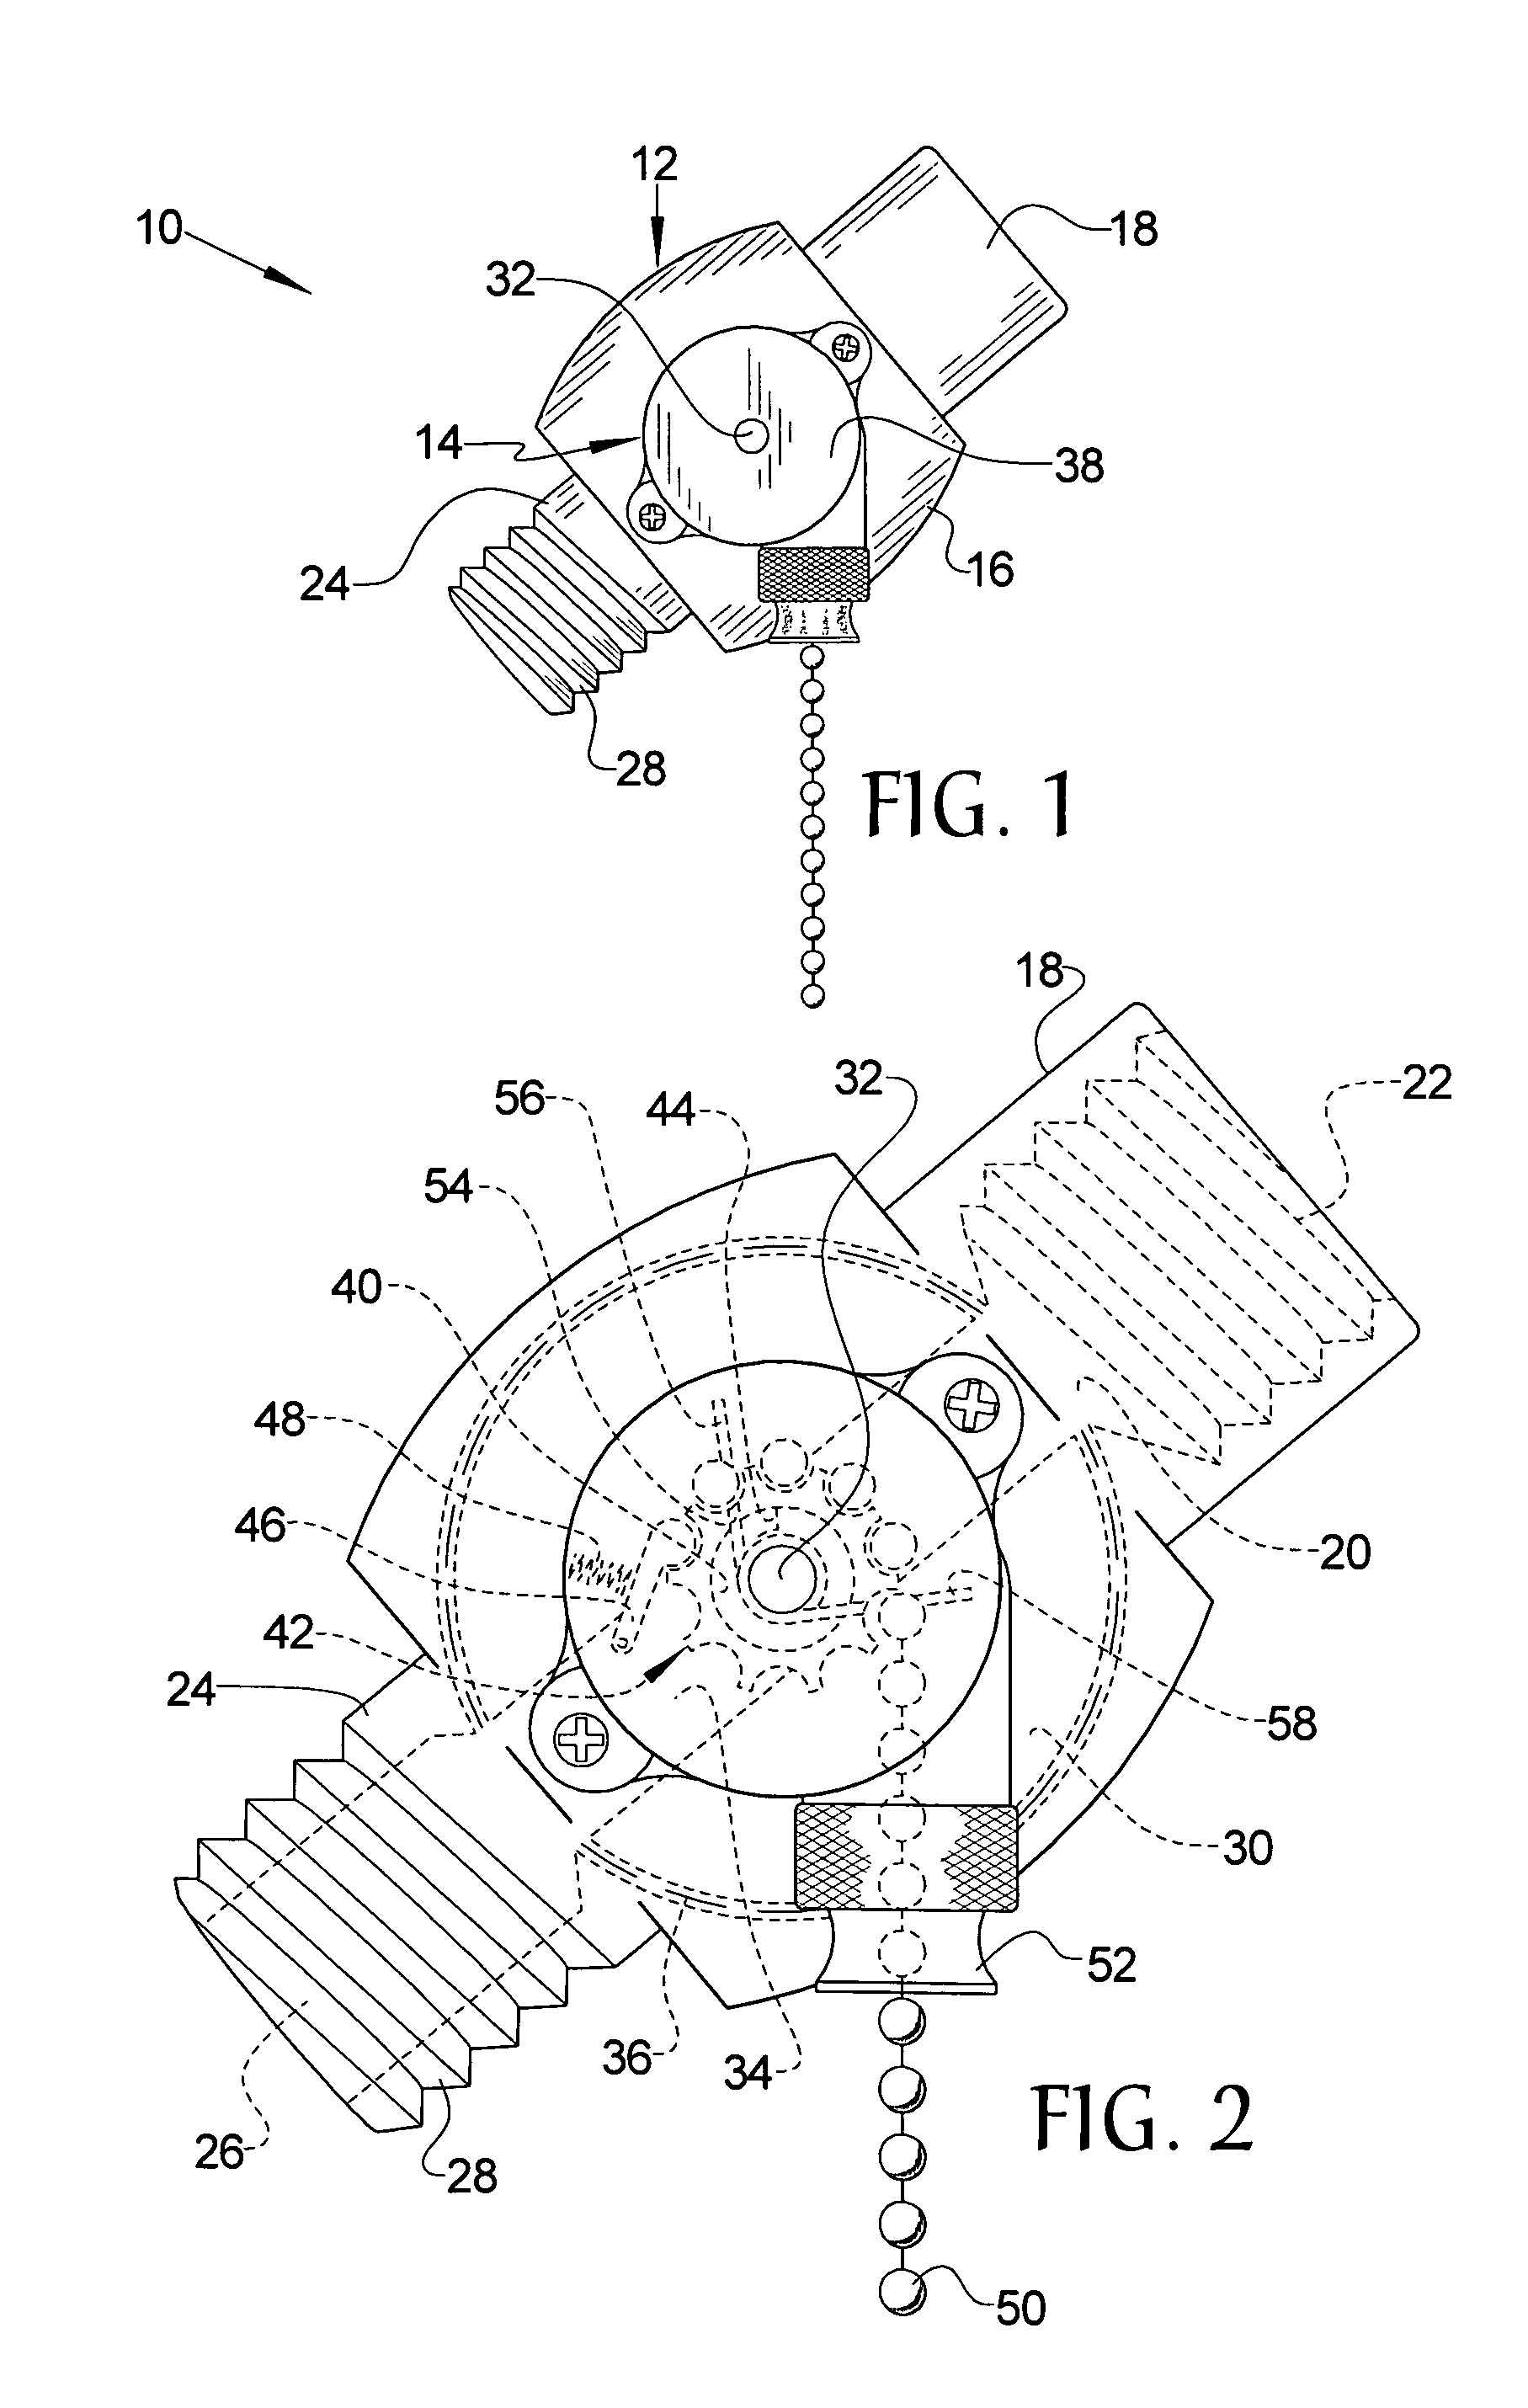 Pull-chain shower valve